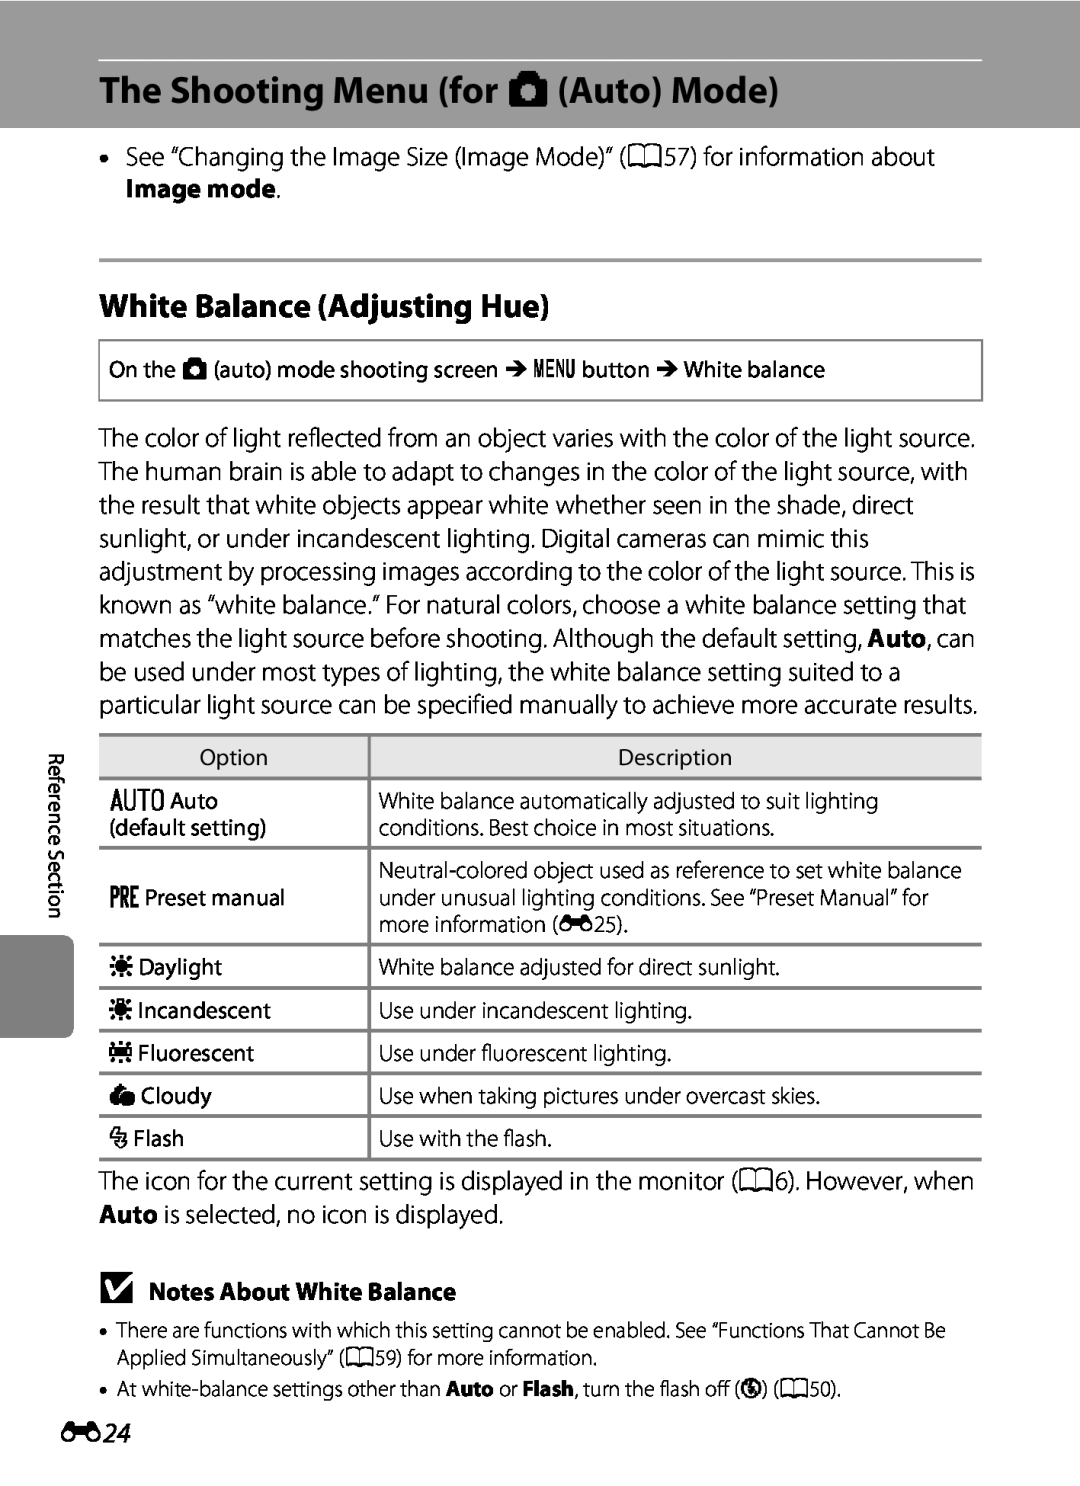 Nikon S2600 manual The Shooting Menu for AAuto Mode, White Balance Adjusting Hue, B Notes About White Balance 